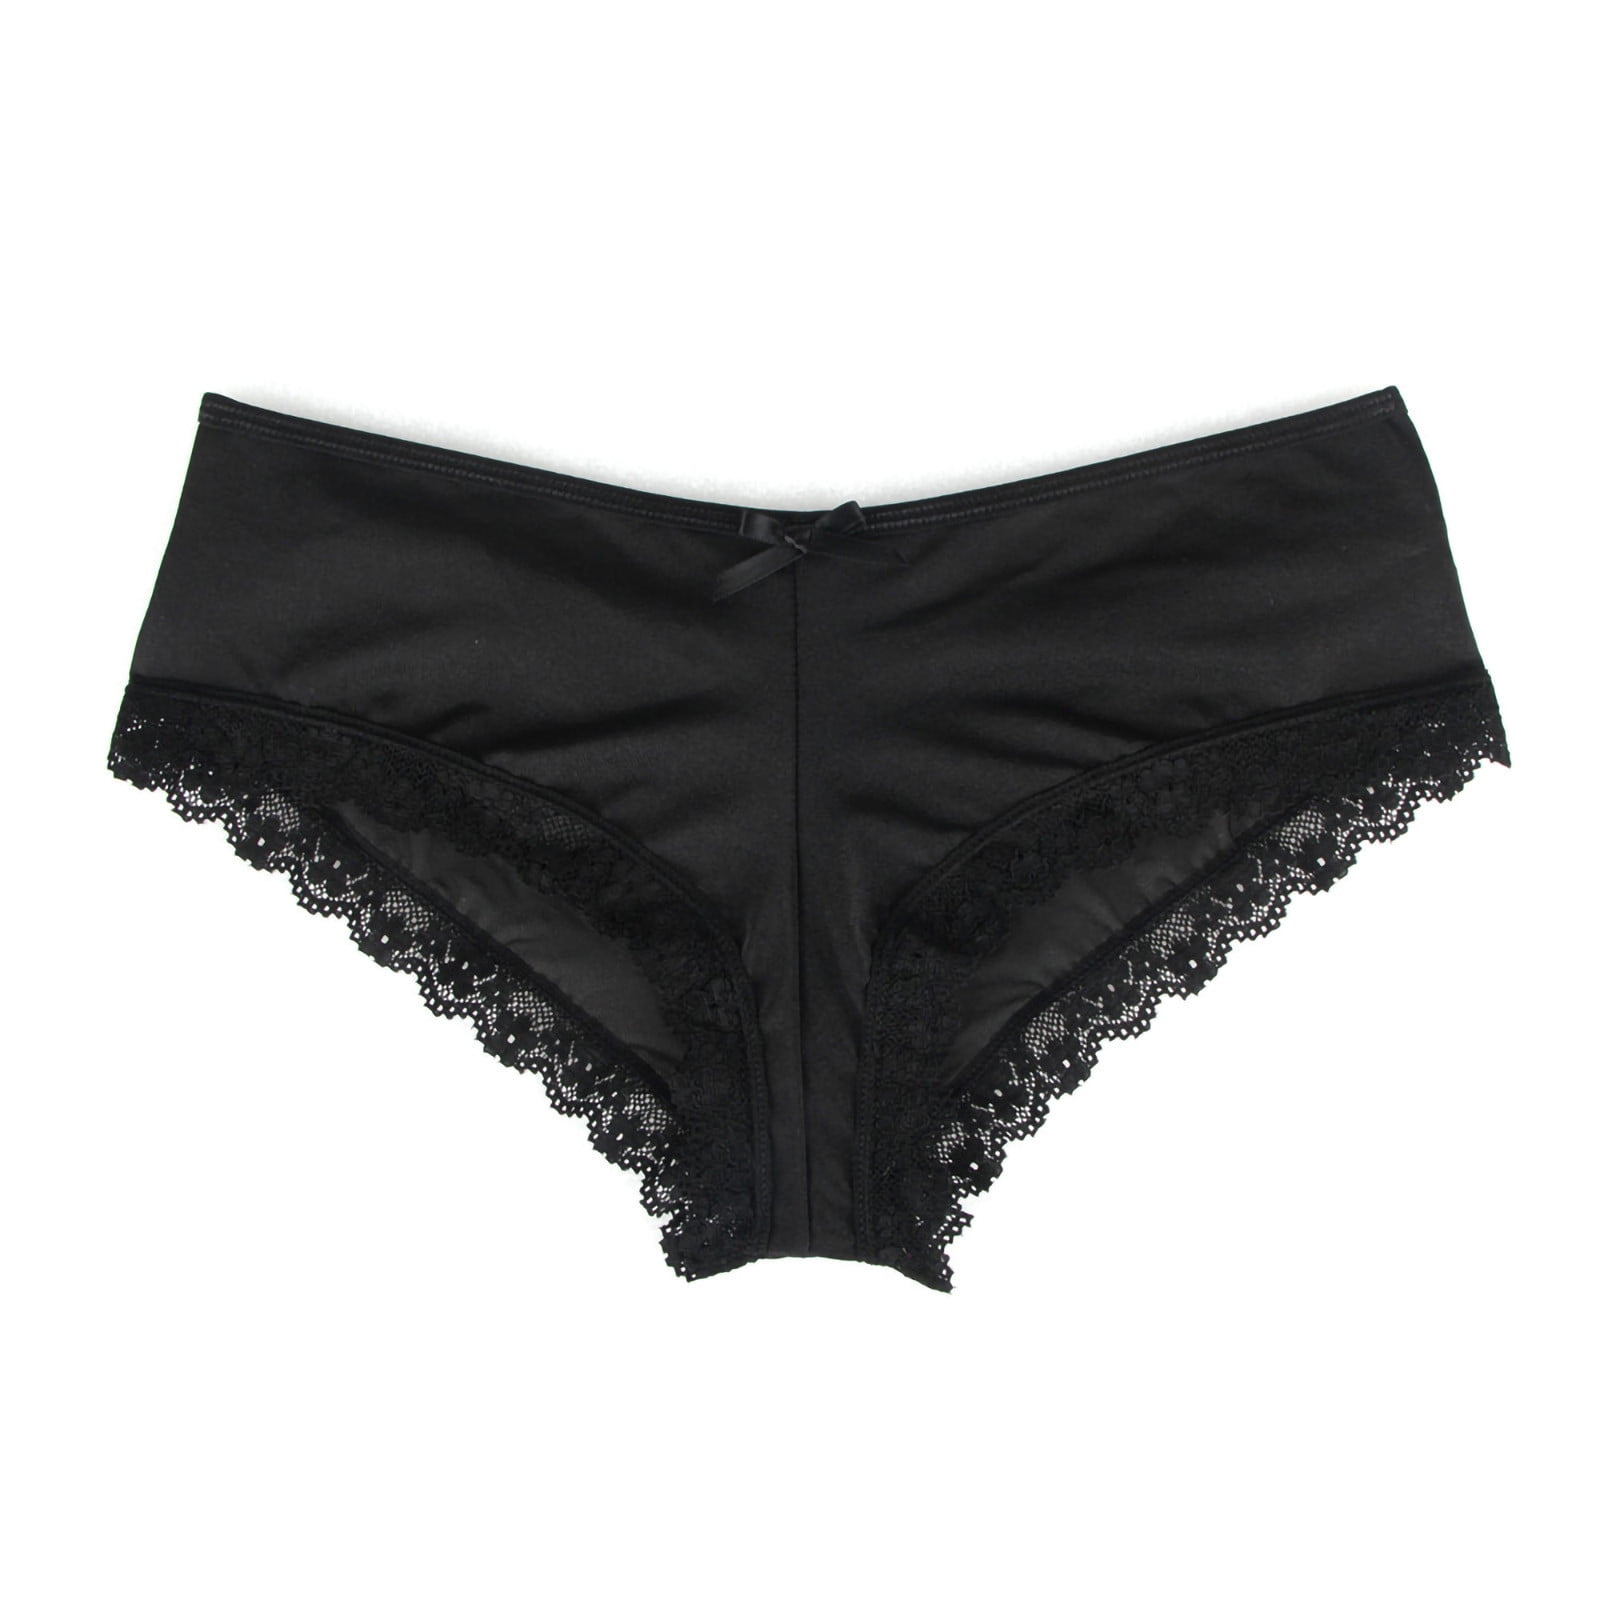 MILF Black Victoria Secret Cheeky Personalized Panties FAST